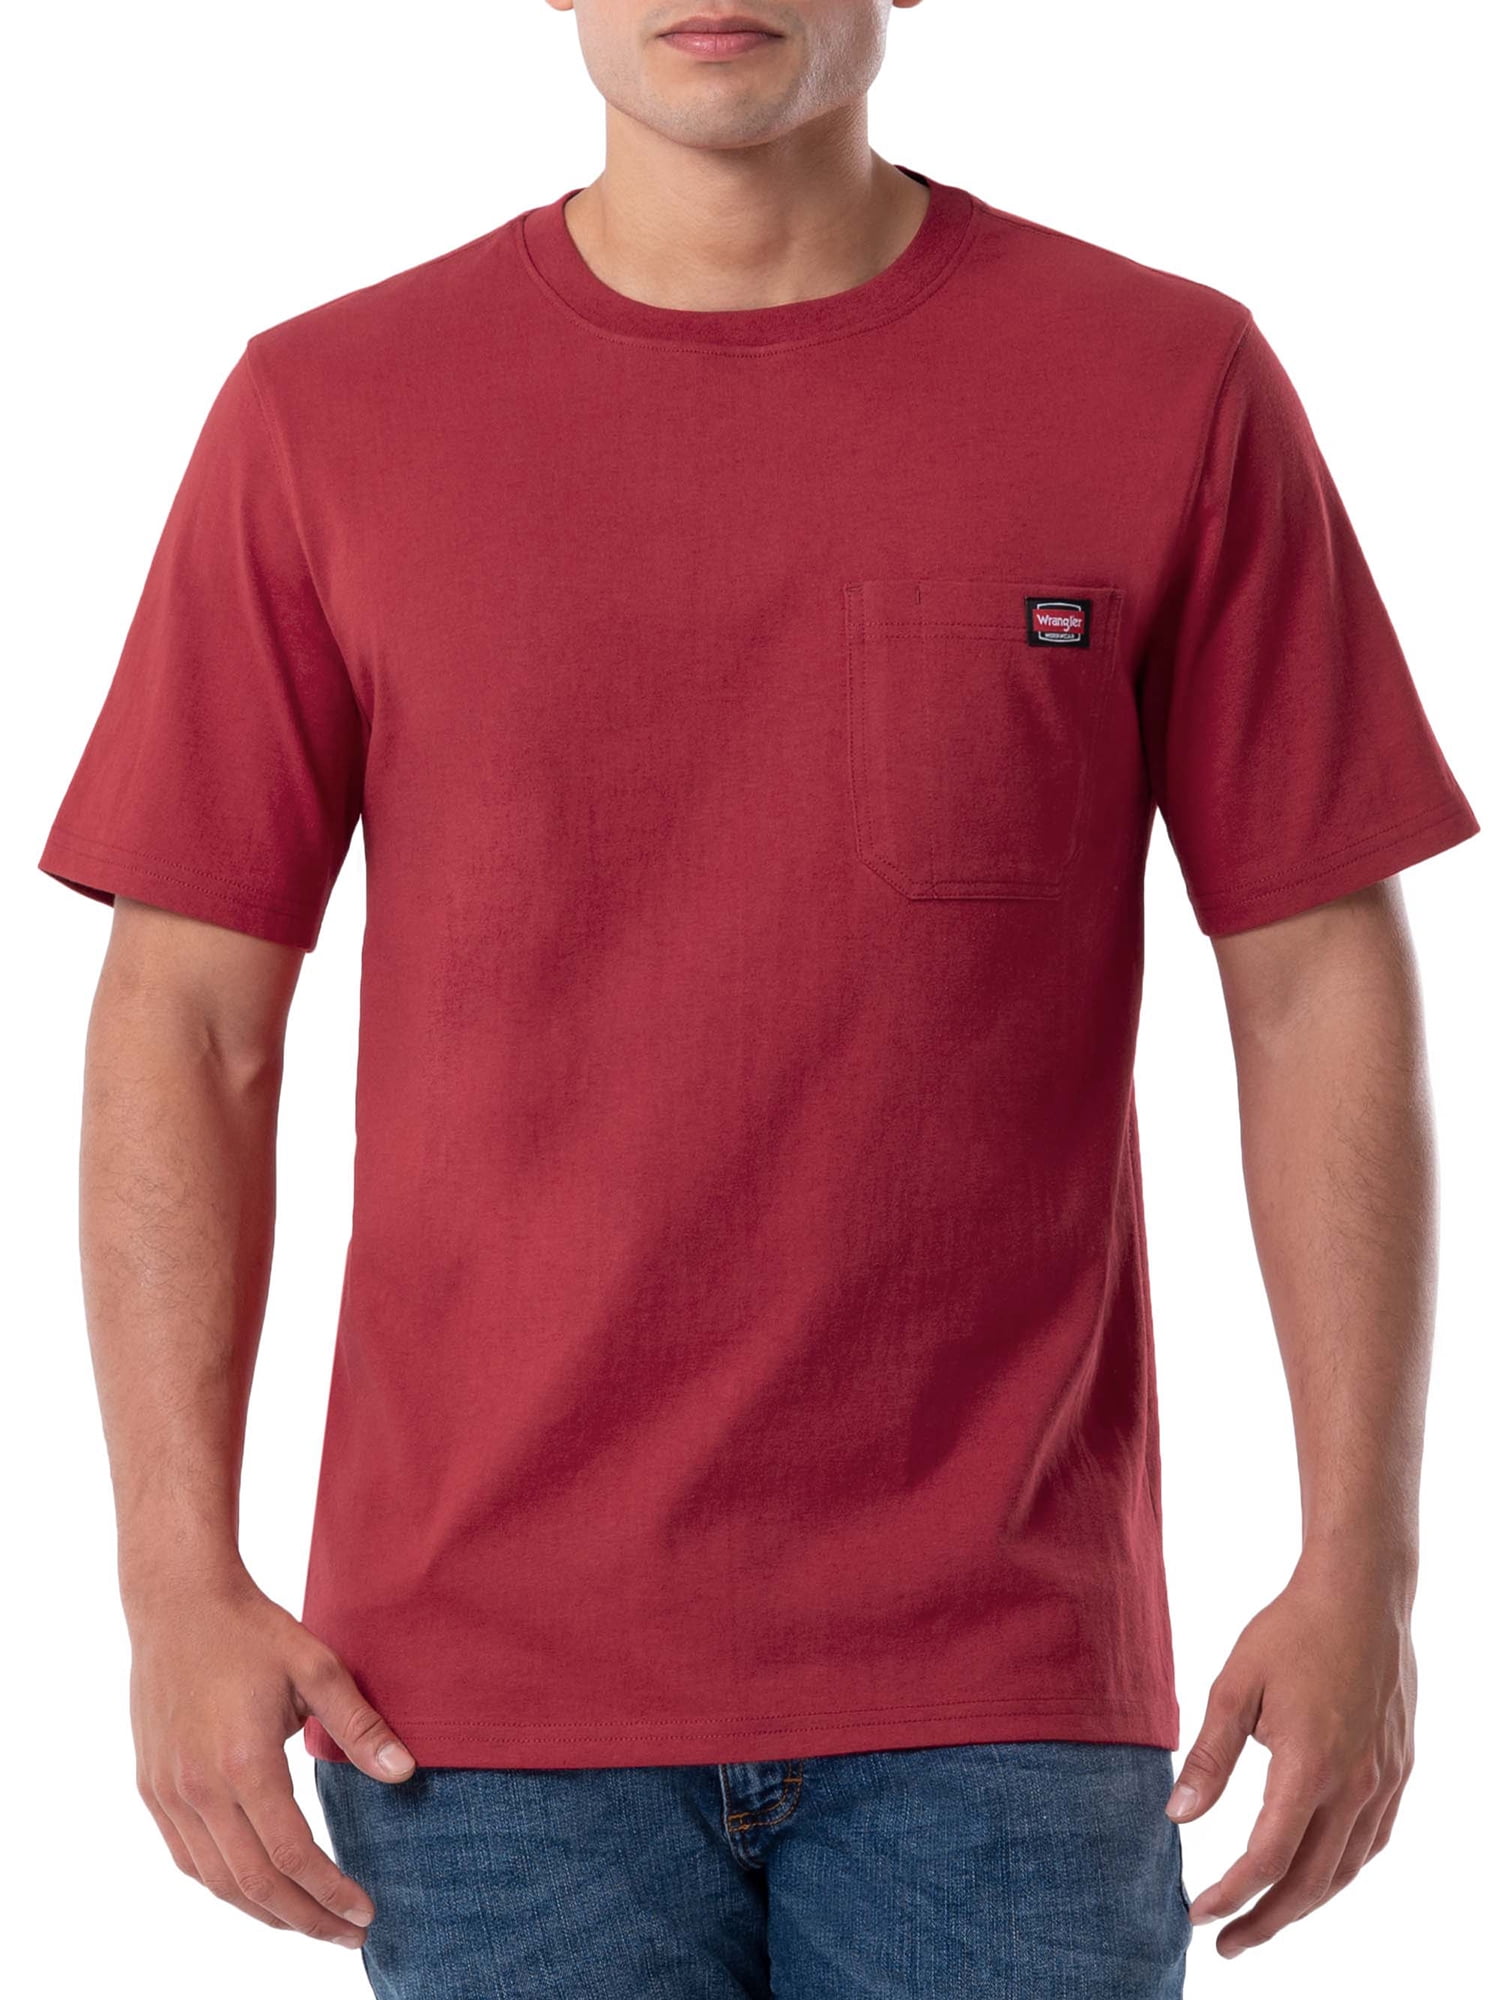 Wrangler Mens Band Stripe Short Sleeve Cotton Crew Neck Casual T-Shirt Tee Top 